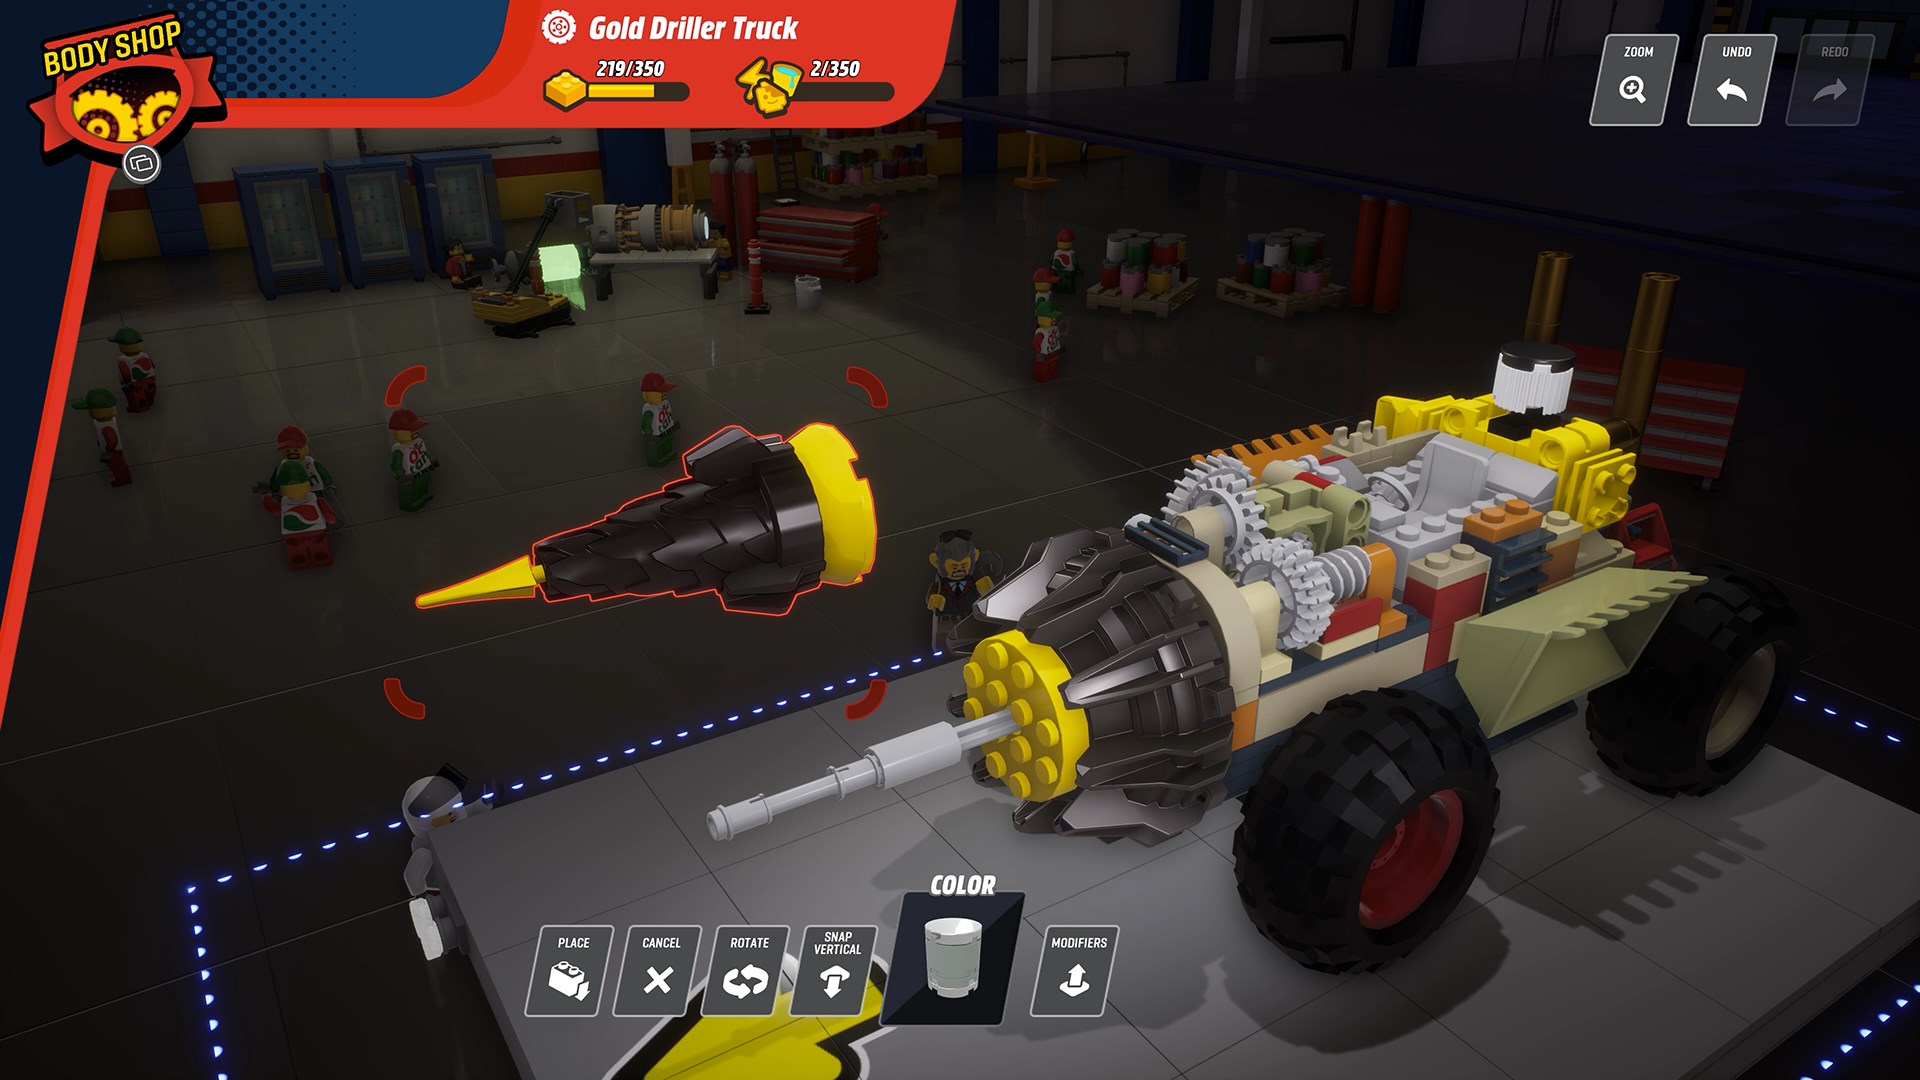 LEGO 2K Drive: Awesome Edition LATAM Steam CD Key